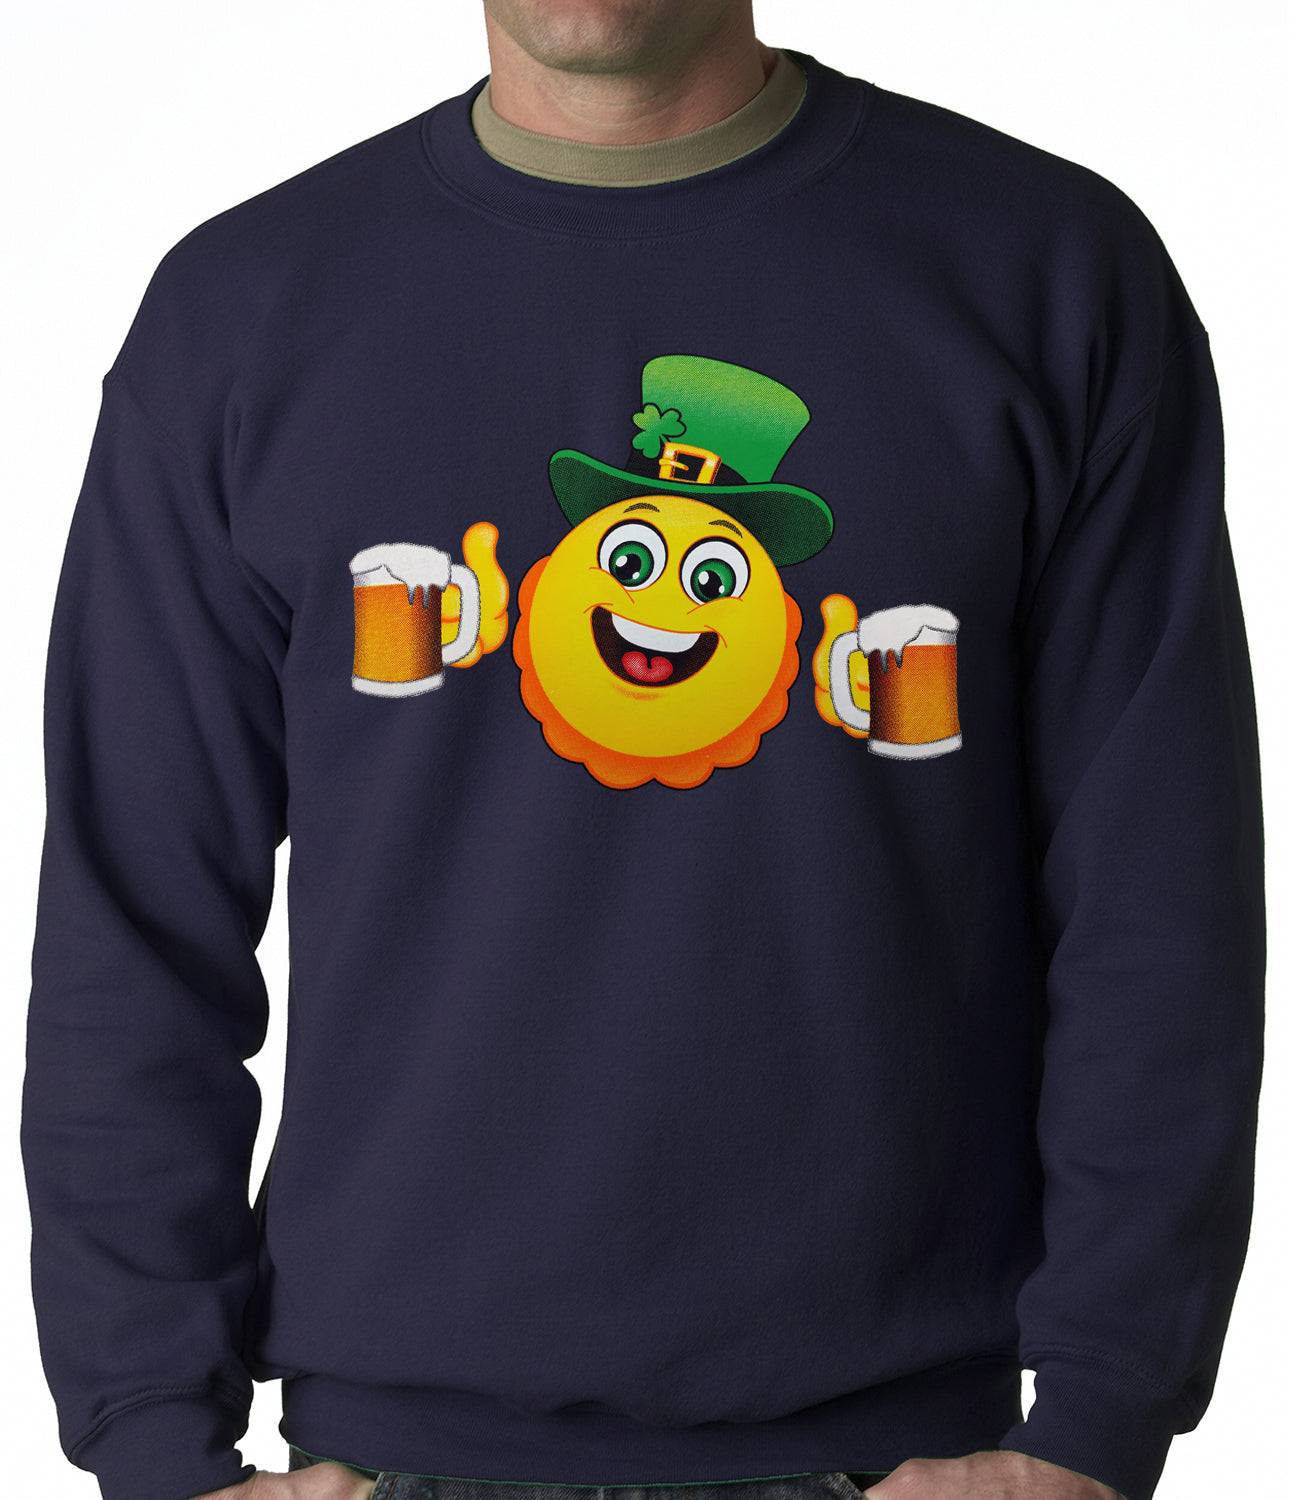 Irish St. Patrick's Day Drinking Leprechaun Emoji Adult Crewneck